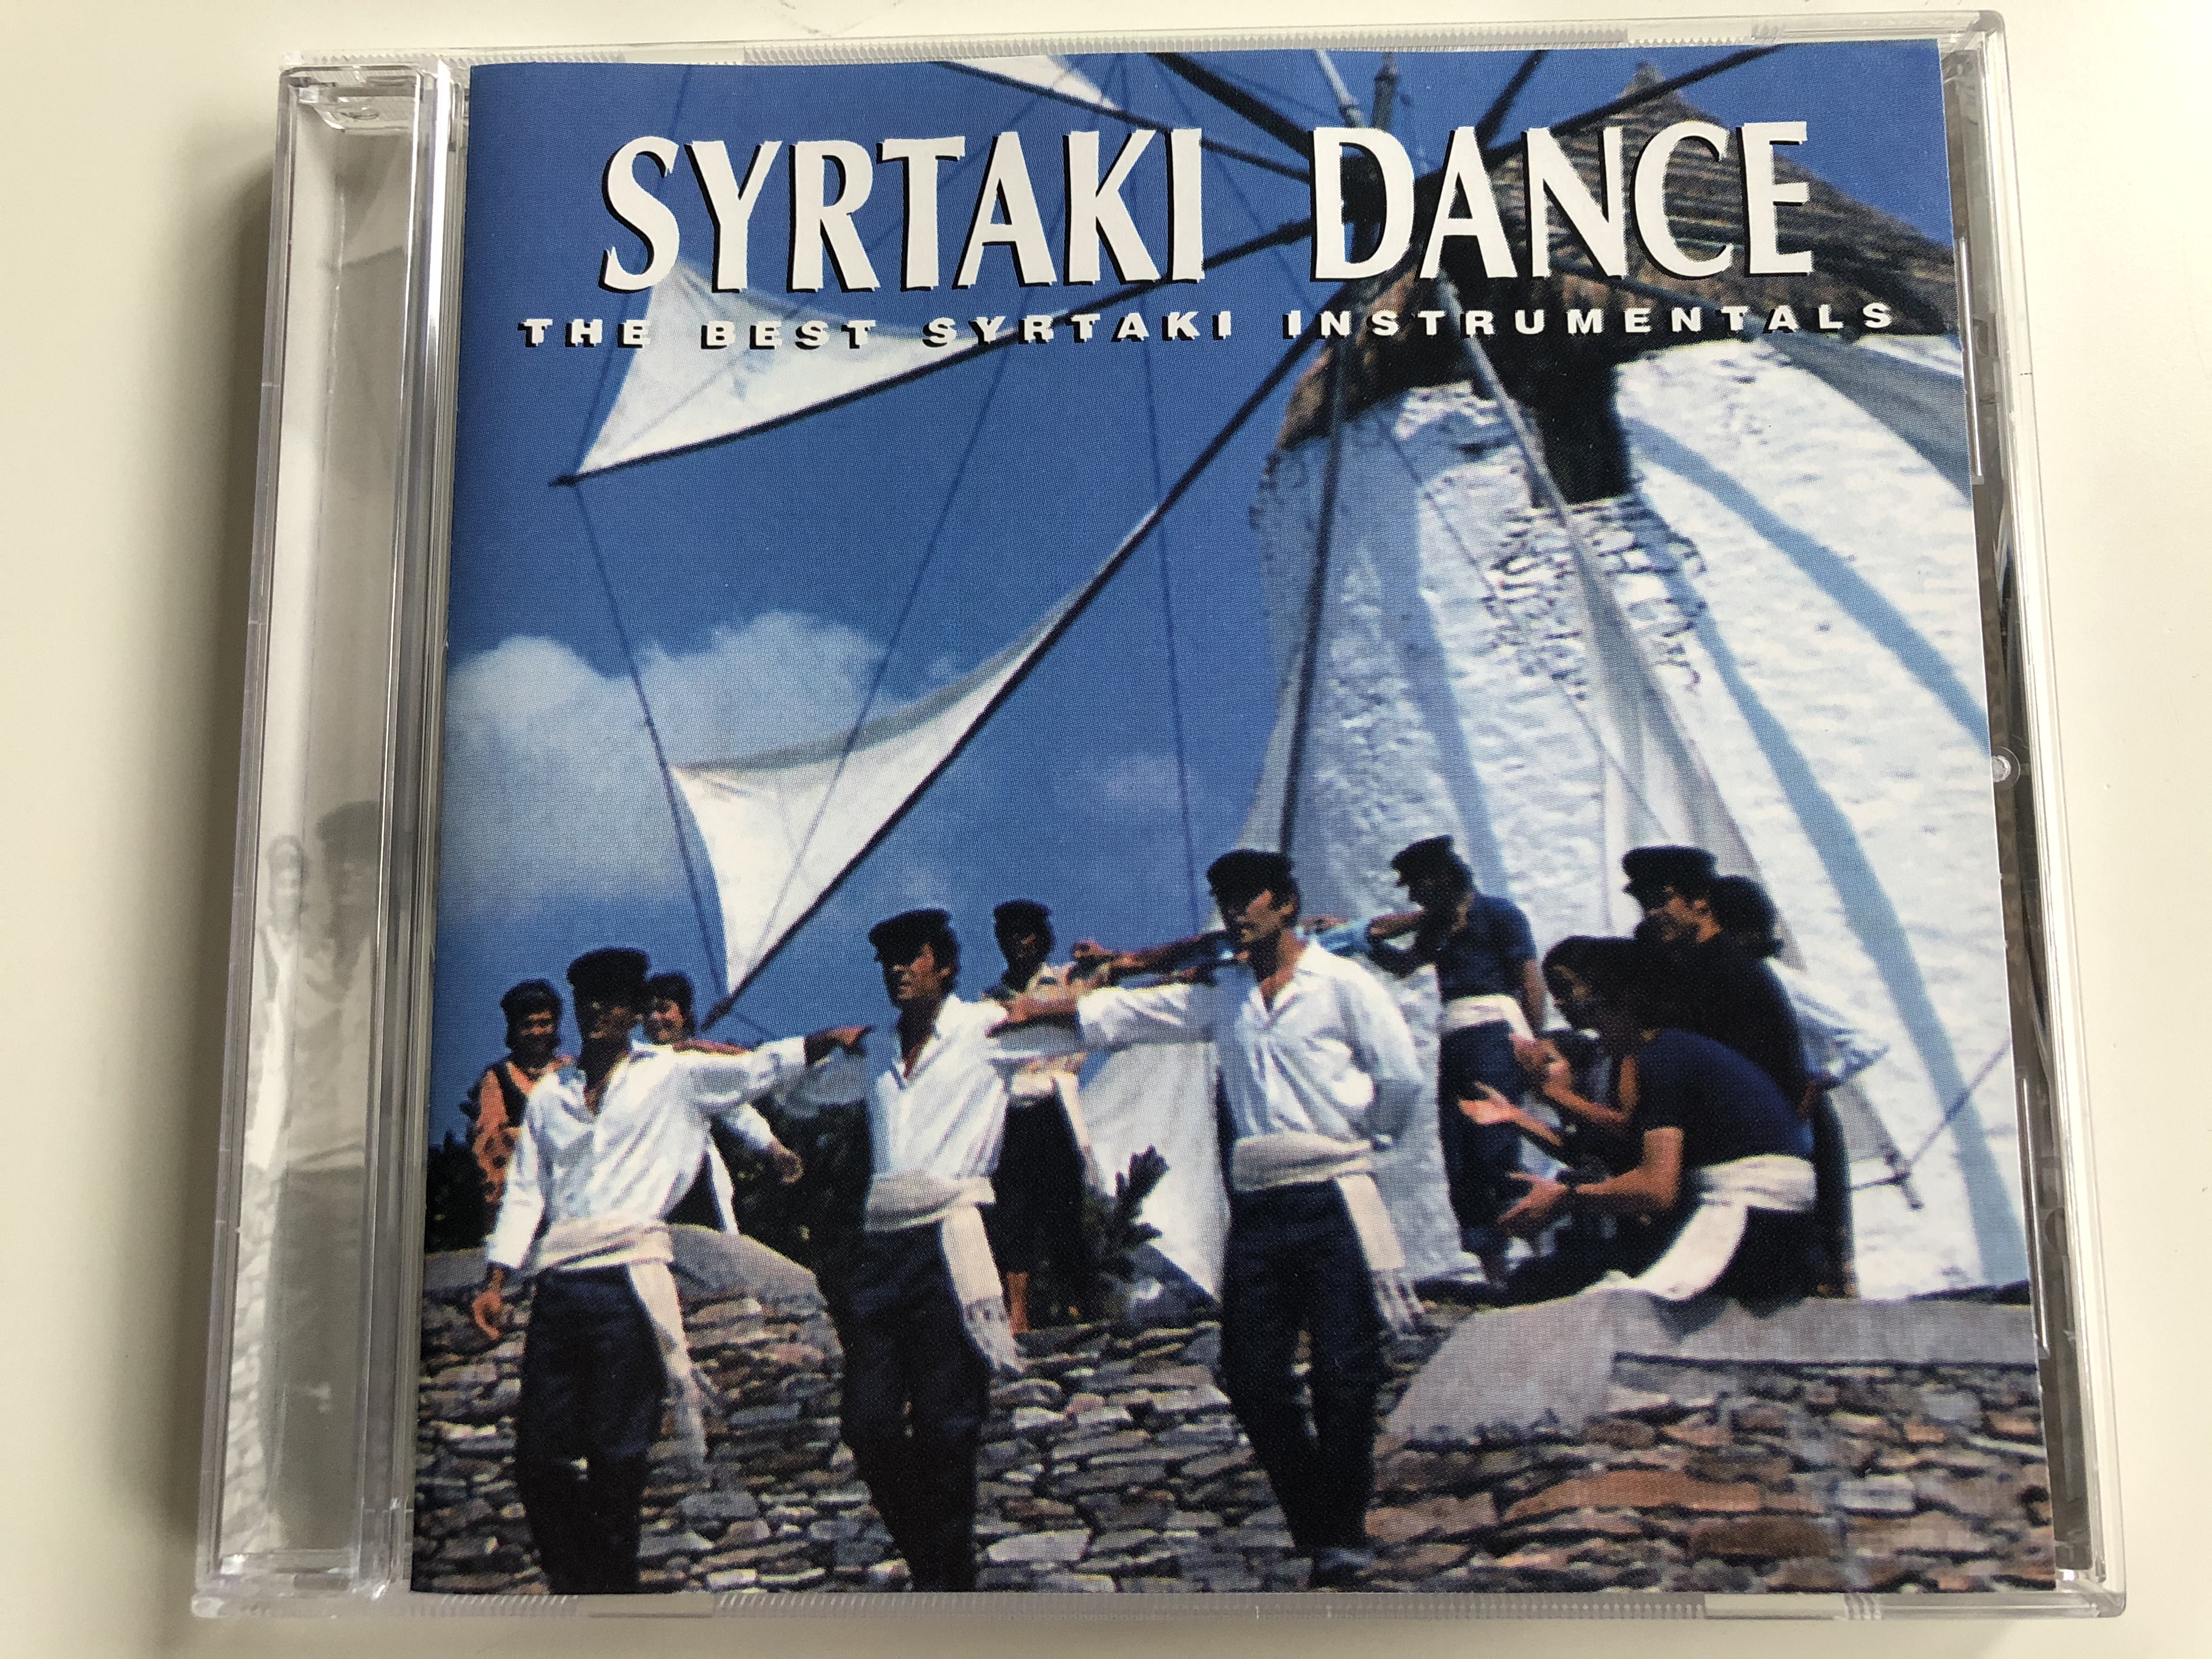 syrtaki-dance-the-best-syrtaki-instrumentals-audio-cd-301-1-.jpg